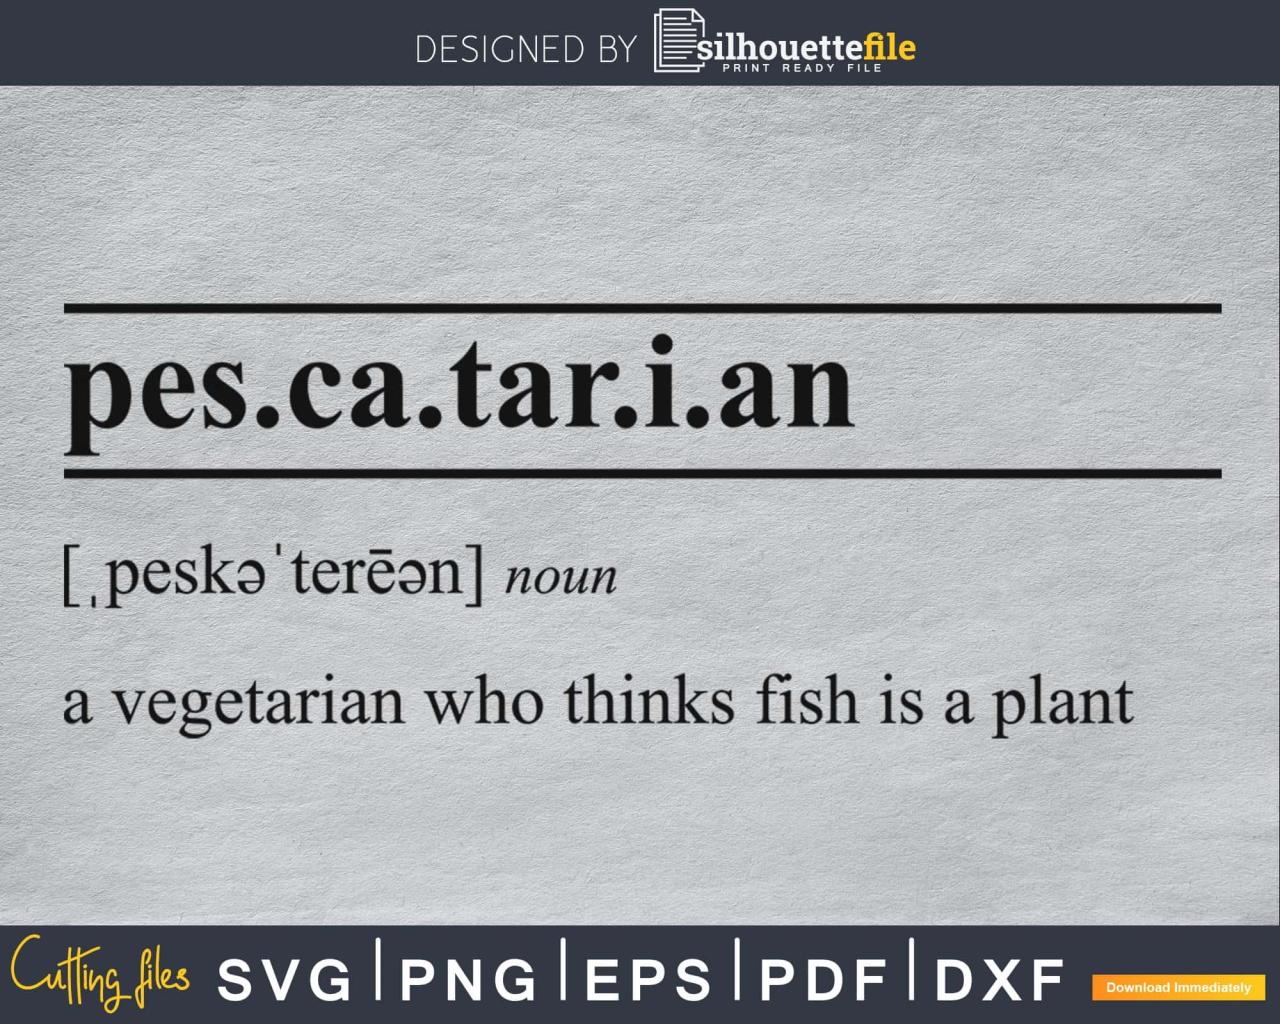 Pescaterian definition